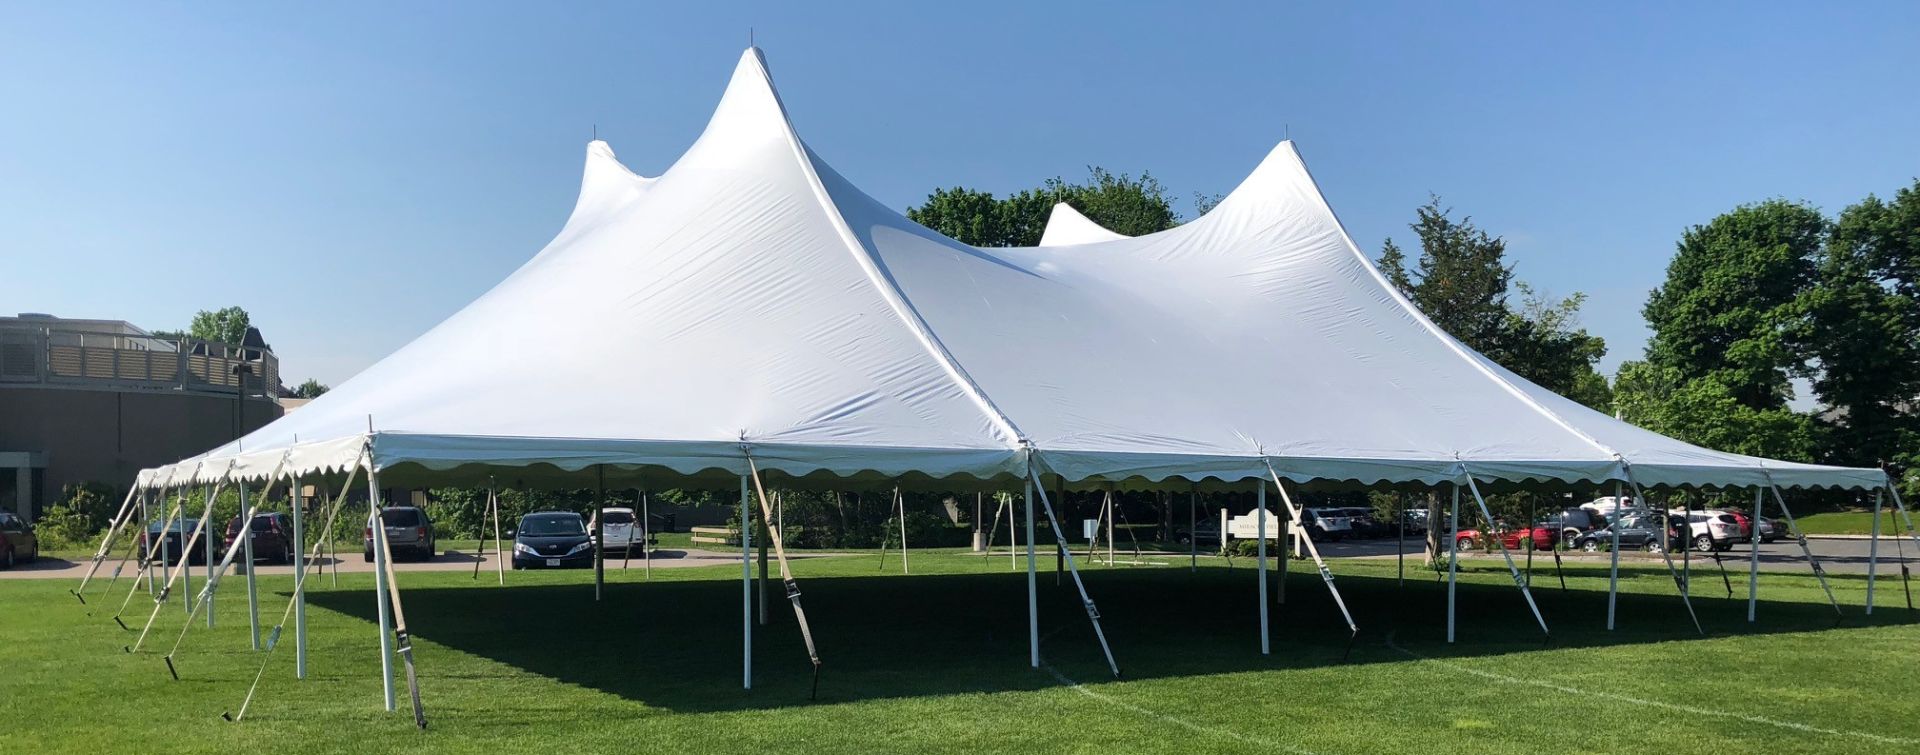 60x70 ft Century white tent